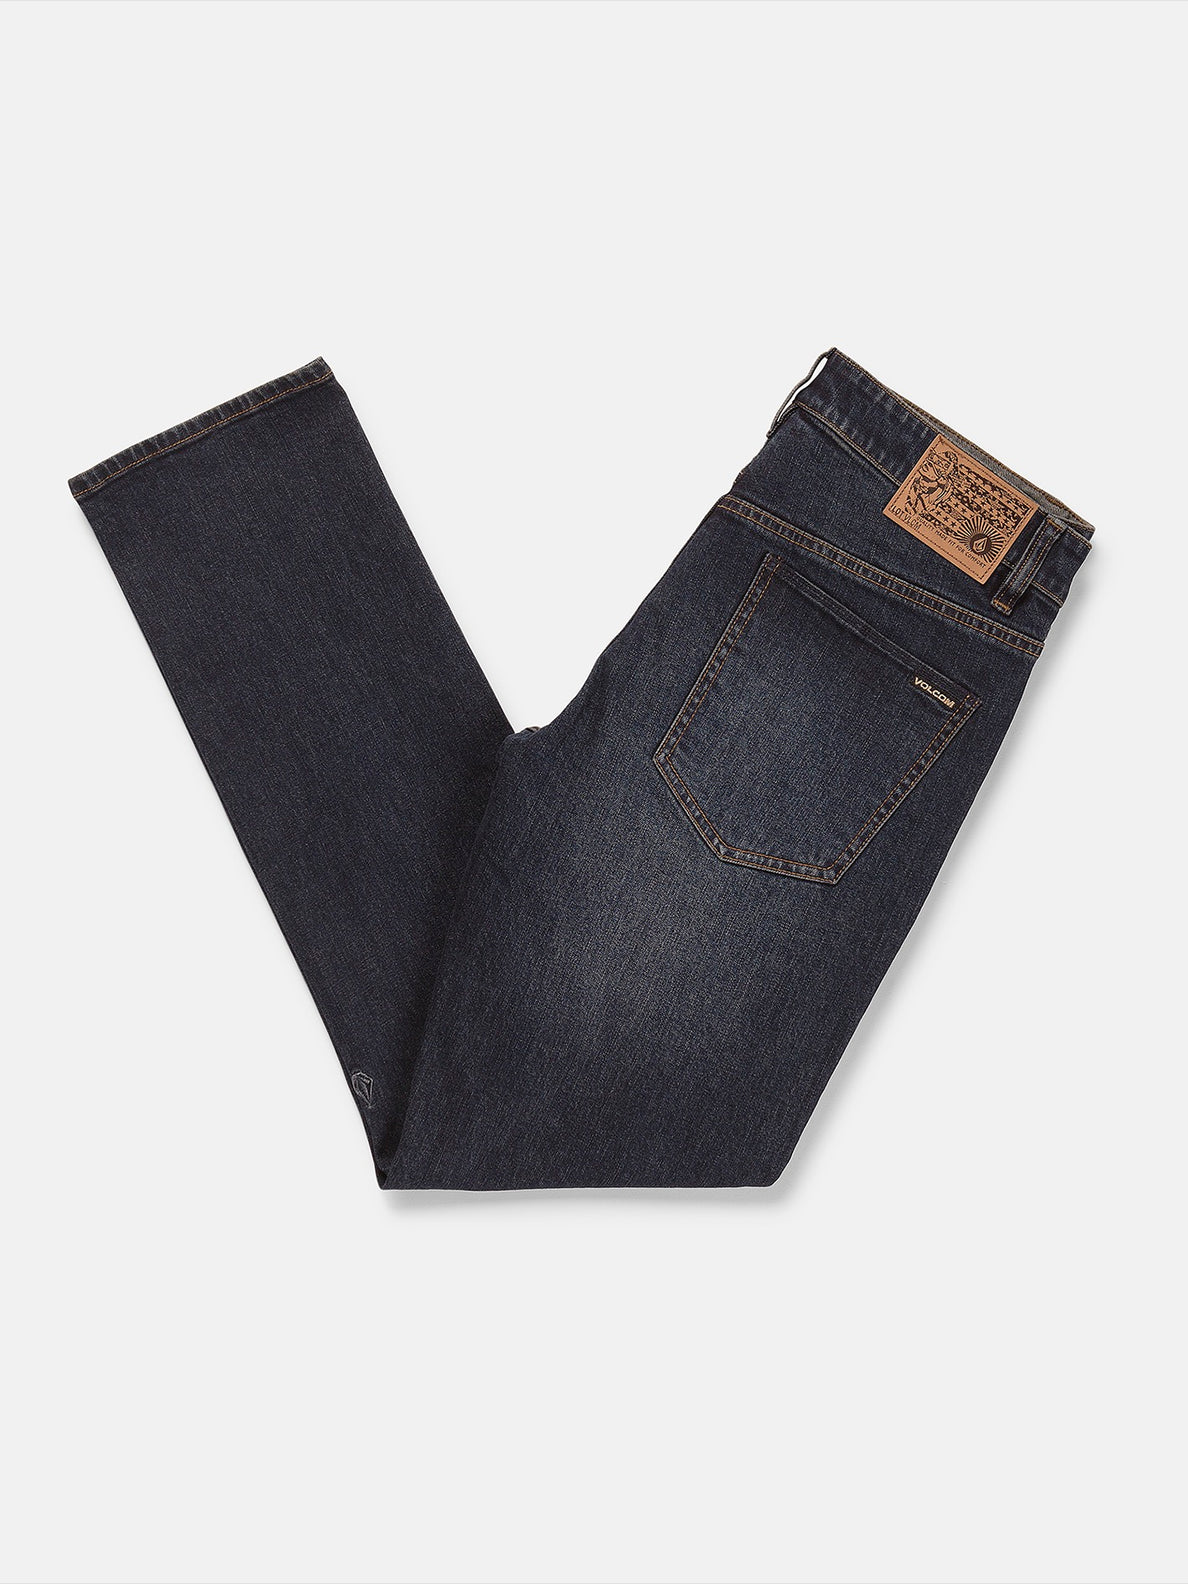 Vorta Slim Fit Jeans - New Vintage Blue